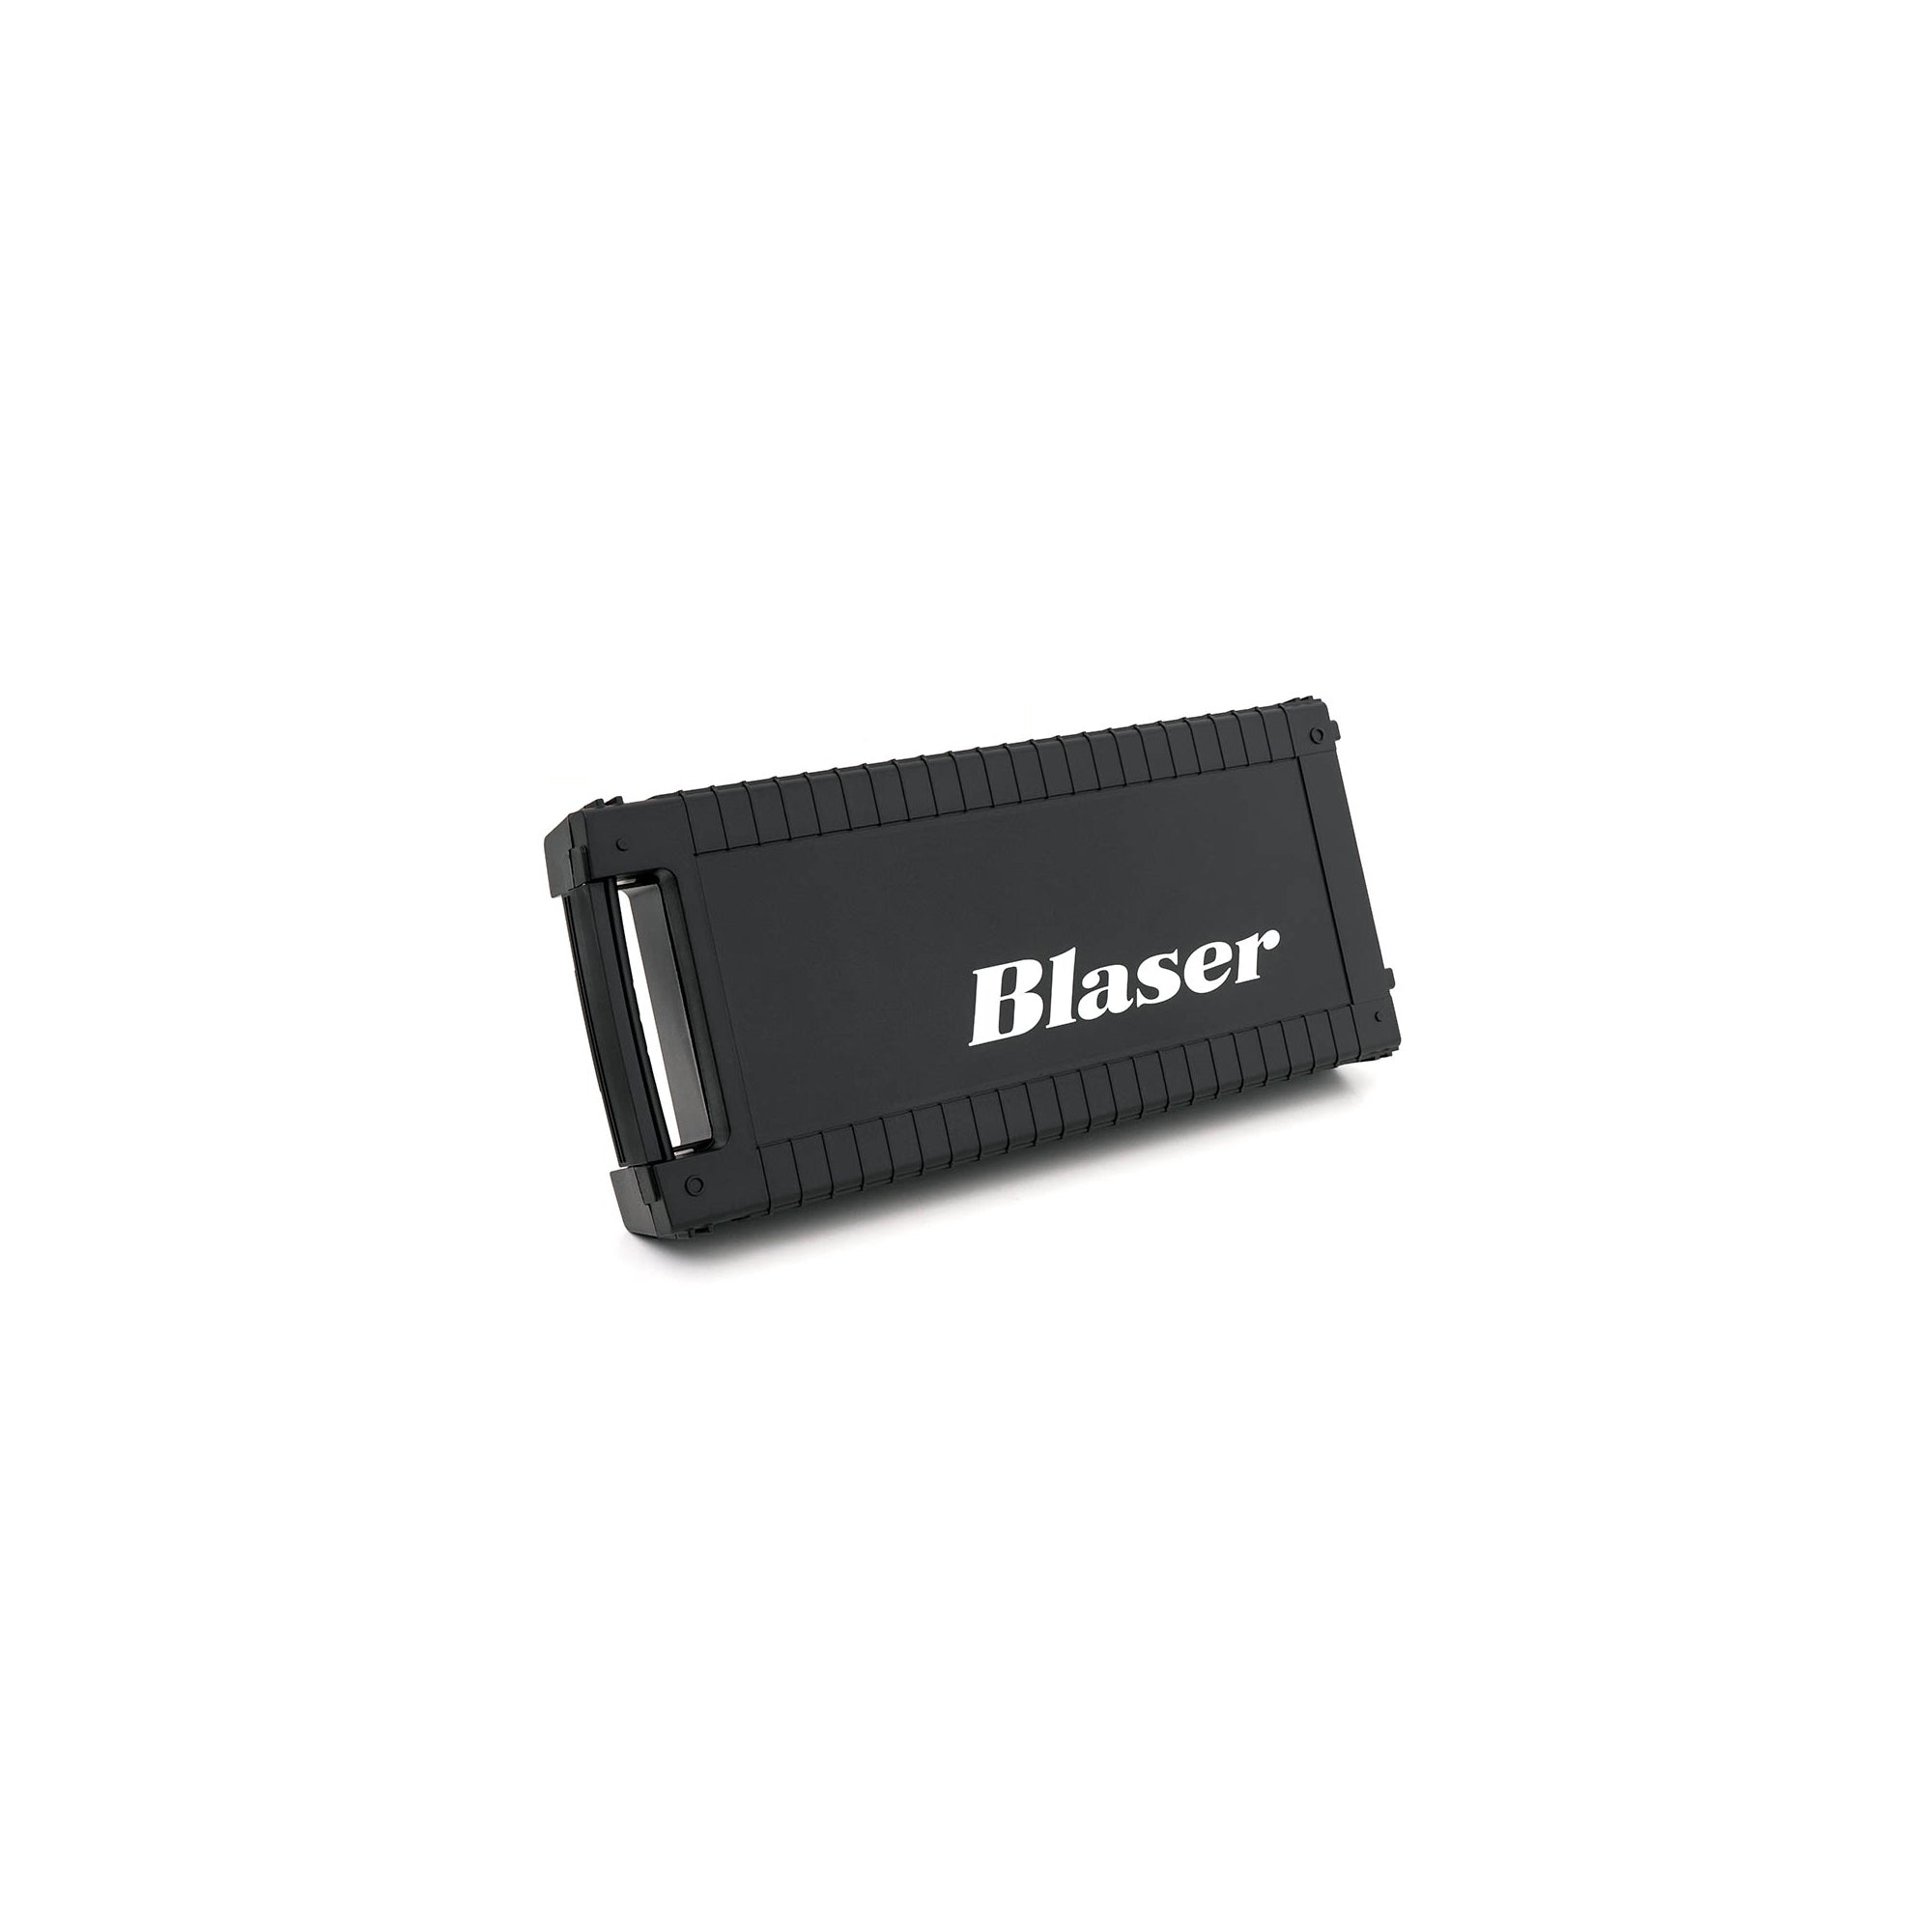 Carbon bipod for BLASER R8 Professional